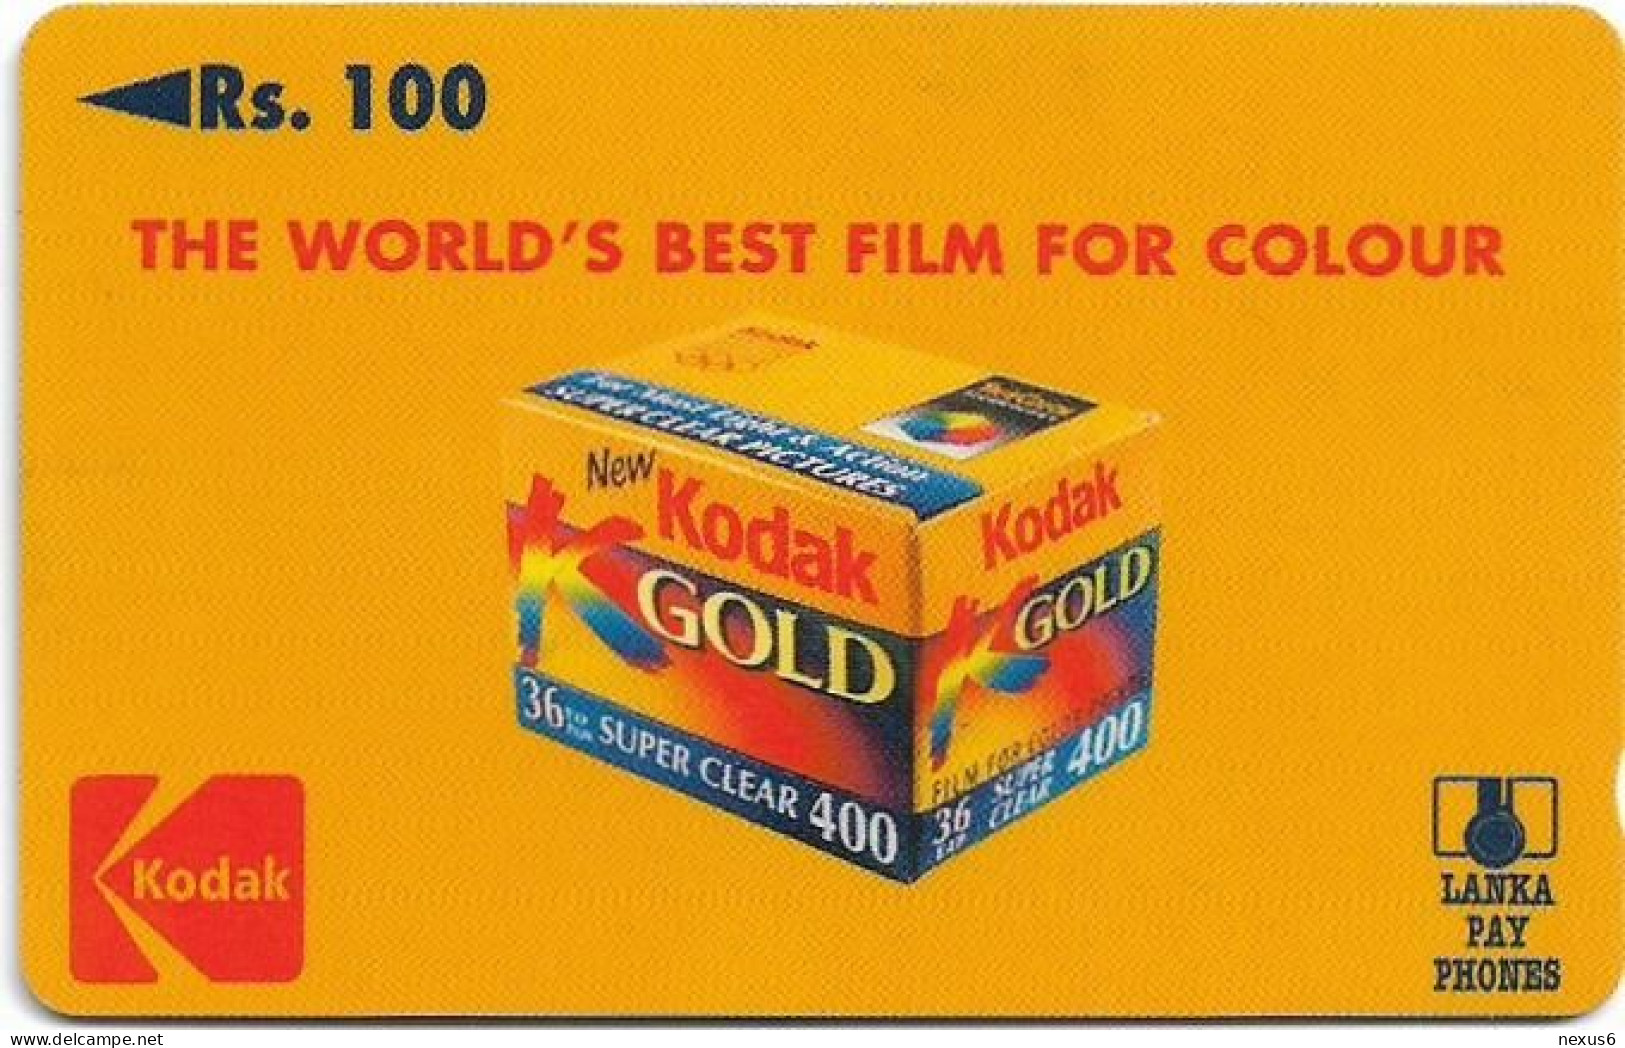 Sri Lanka - Lanka Pay Phones (GPT) - Kodak Gold Film - 39SRLA (Normal 0, Letter B), 100Rs, Used - Sri Lanka (Ceylon)